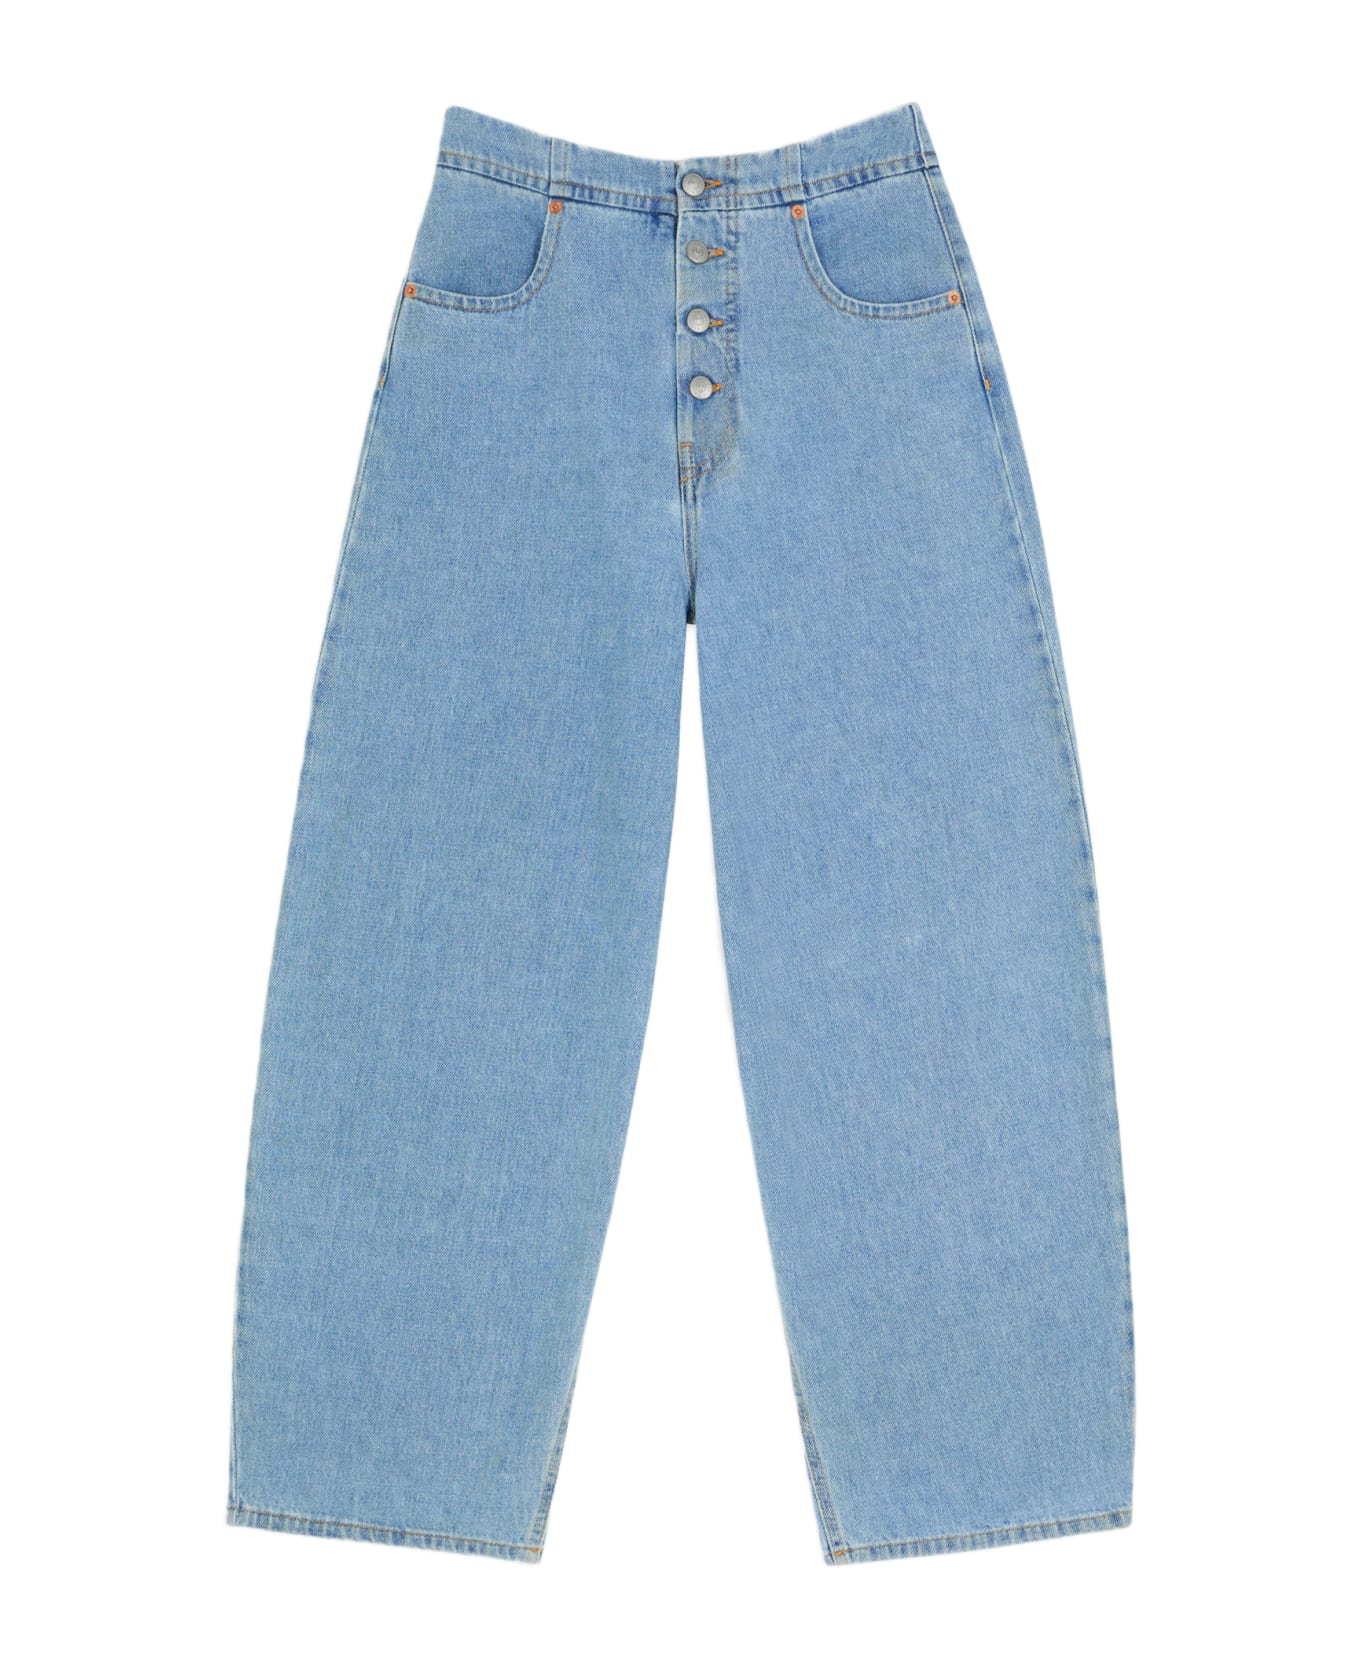 MM6 Maison Margiela Pantalone 5 Tasche Light blue Rhianna 5 pockets jeans - Denim